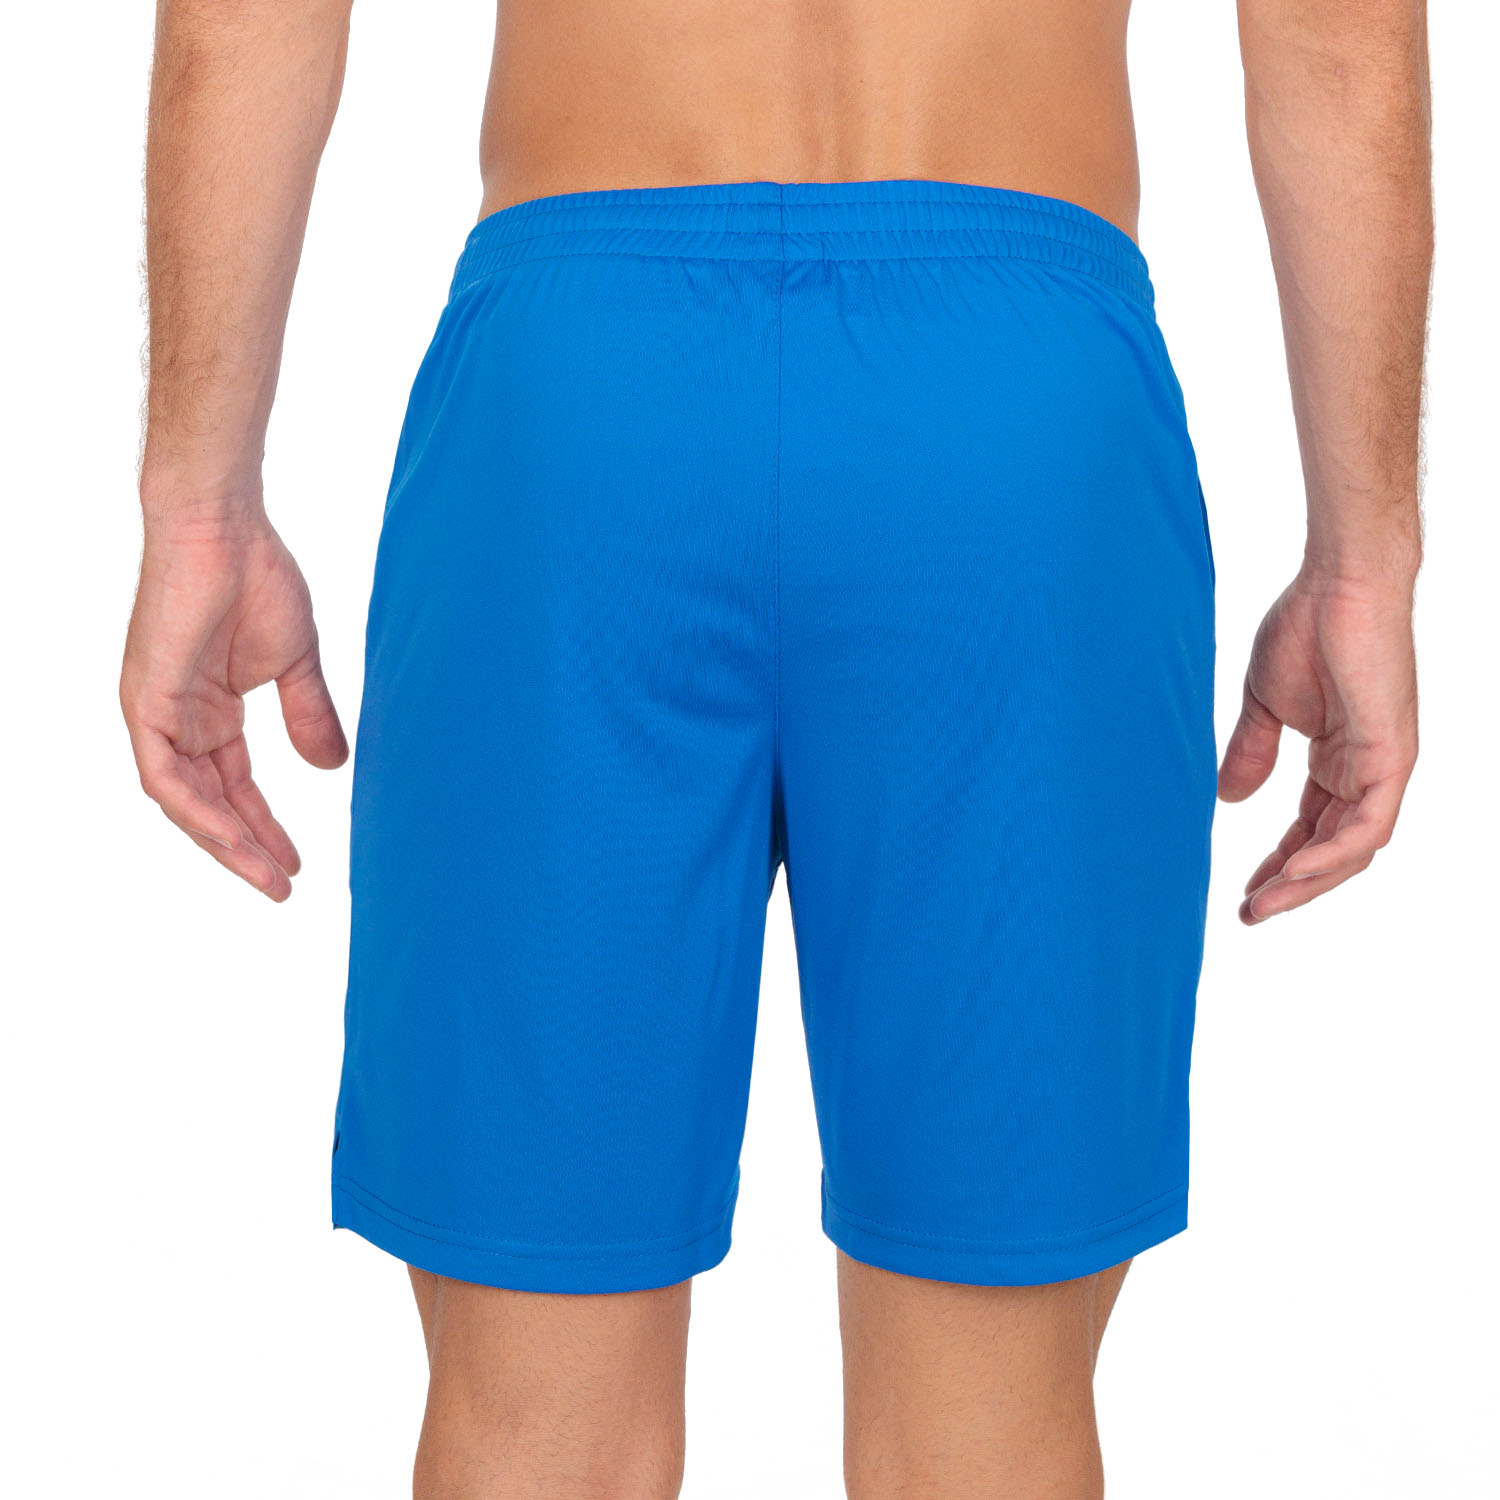 Joma Drive 7.5in Men's Tennis Shorts - Blue/White